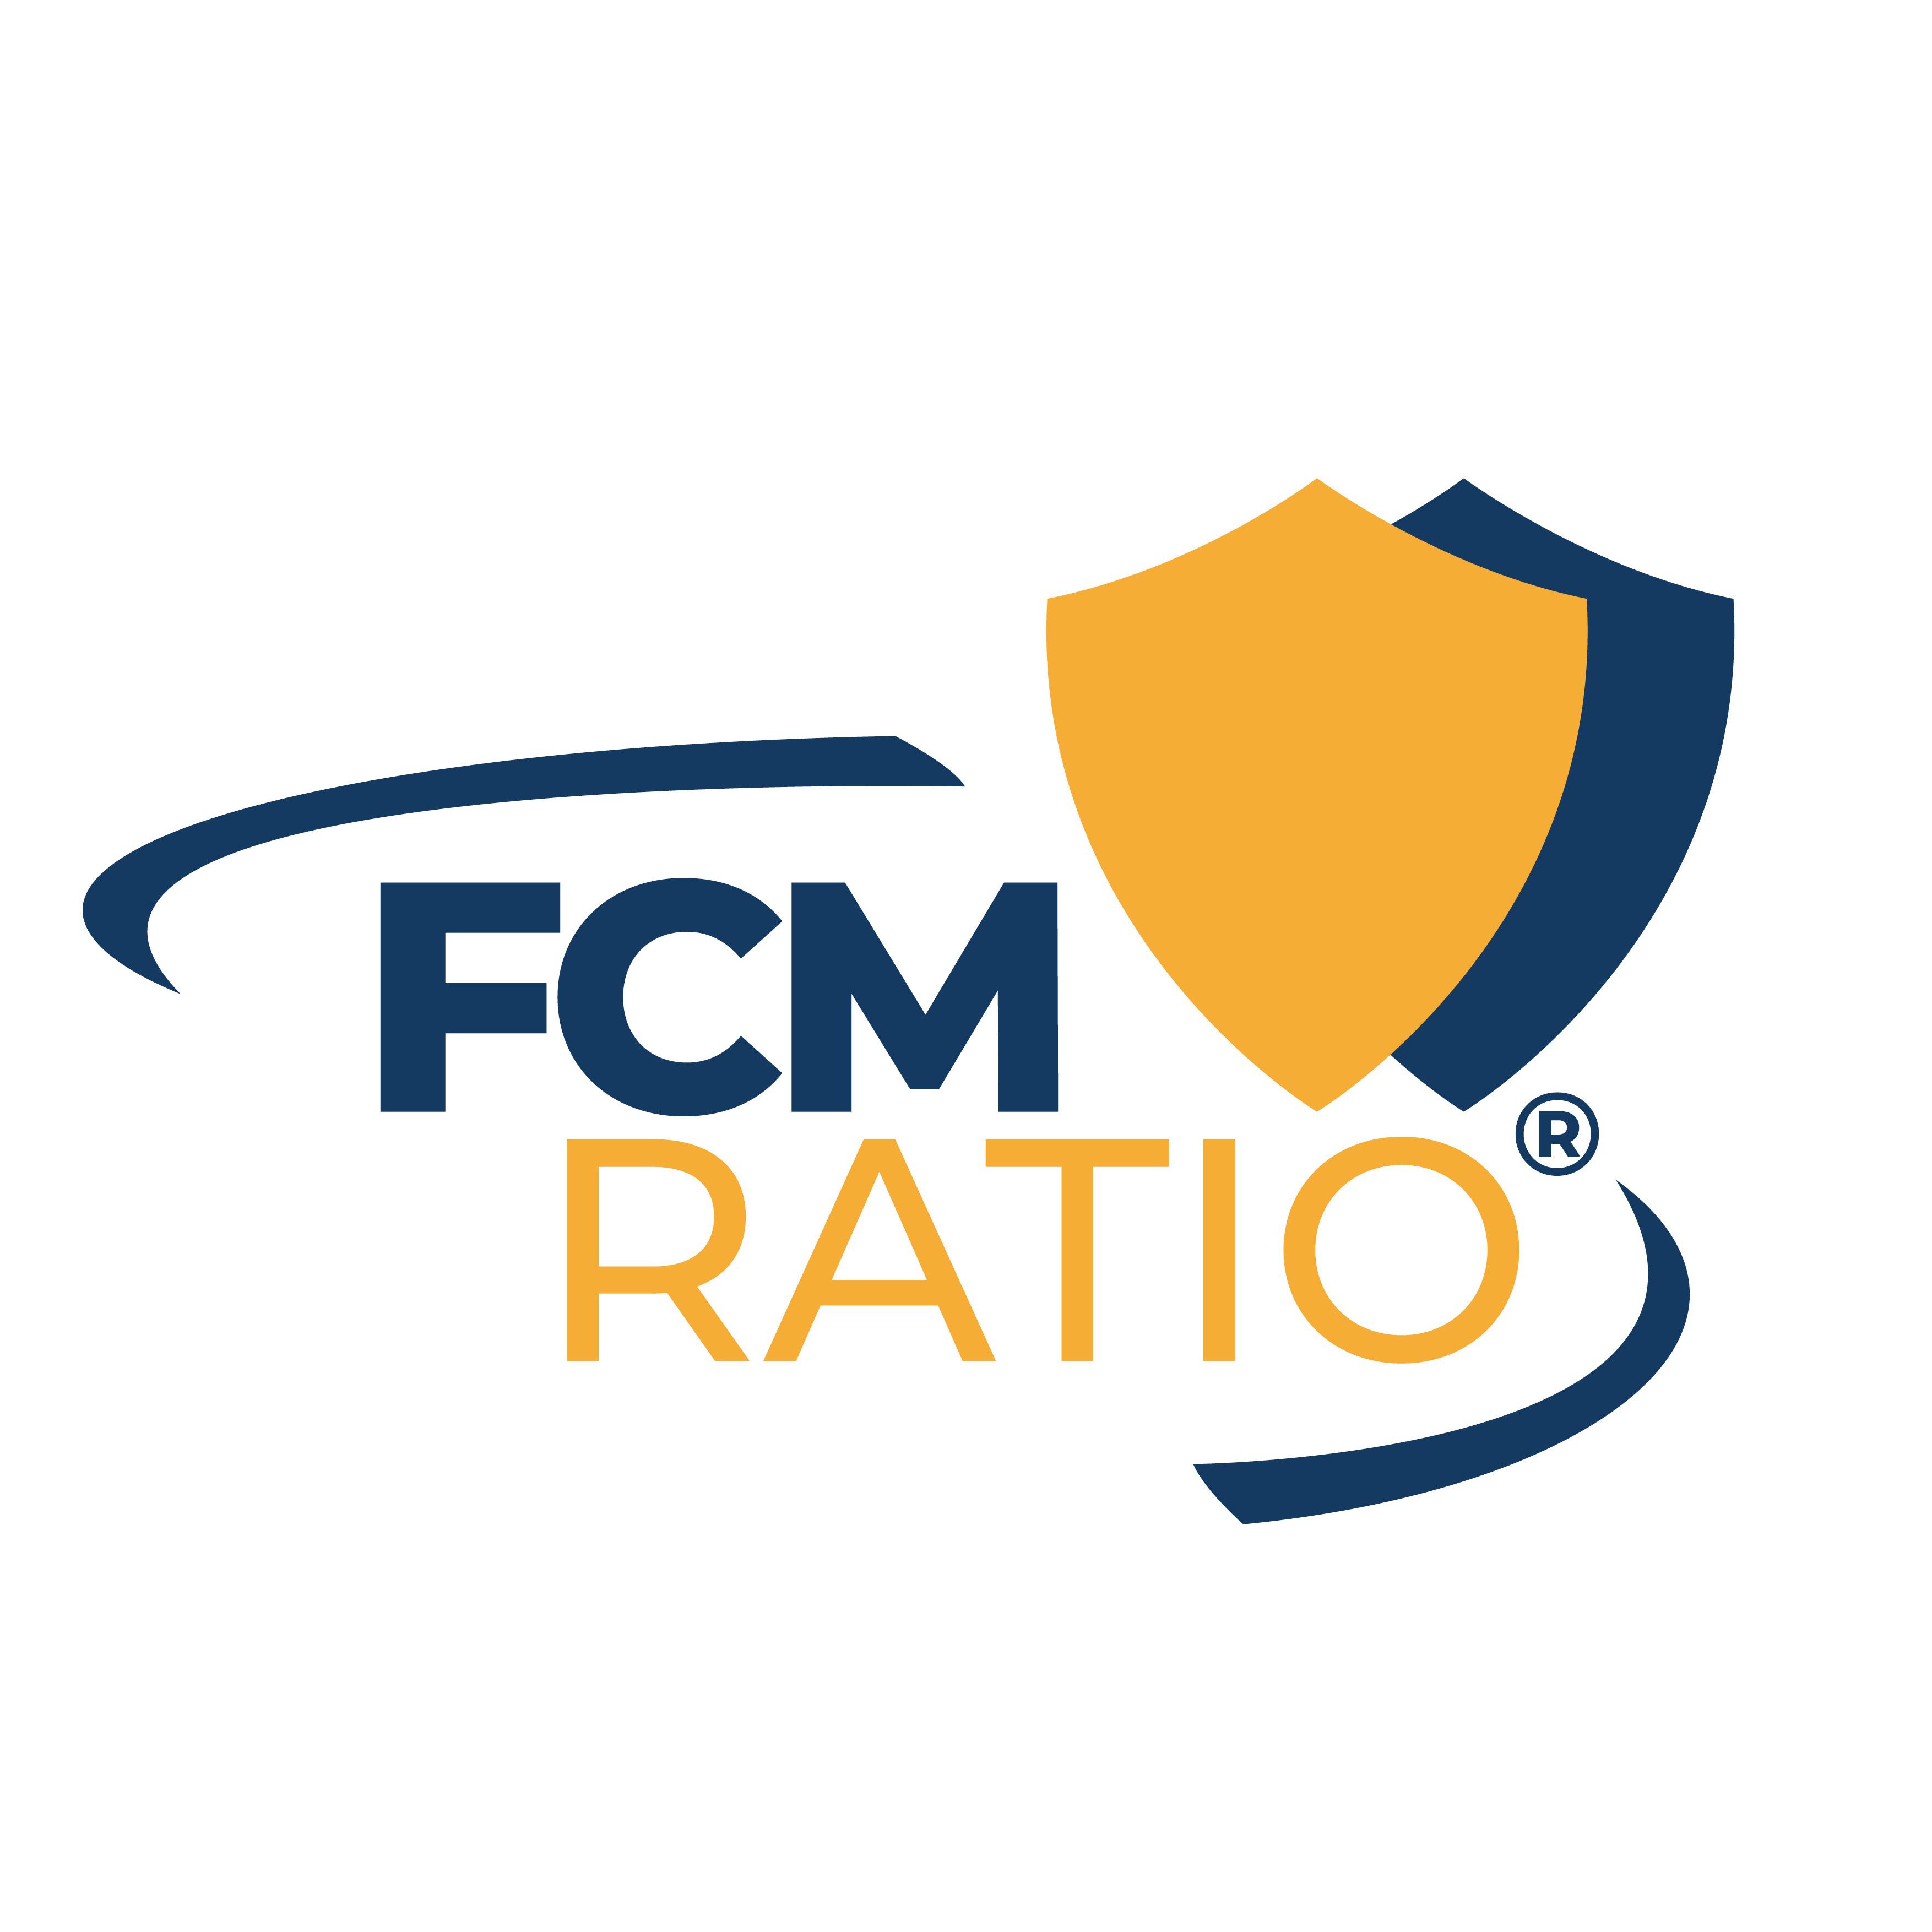 FCM - Ratio